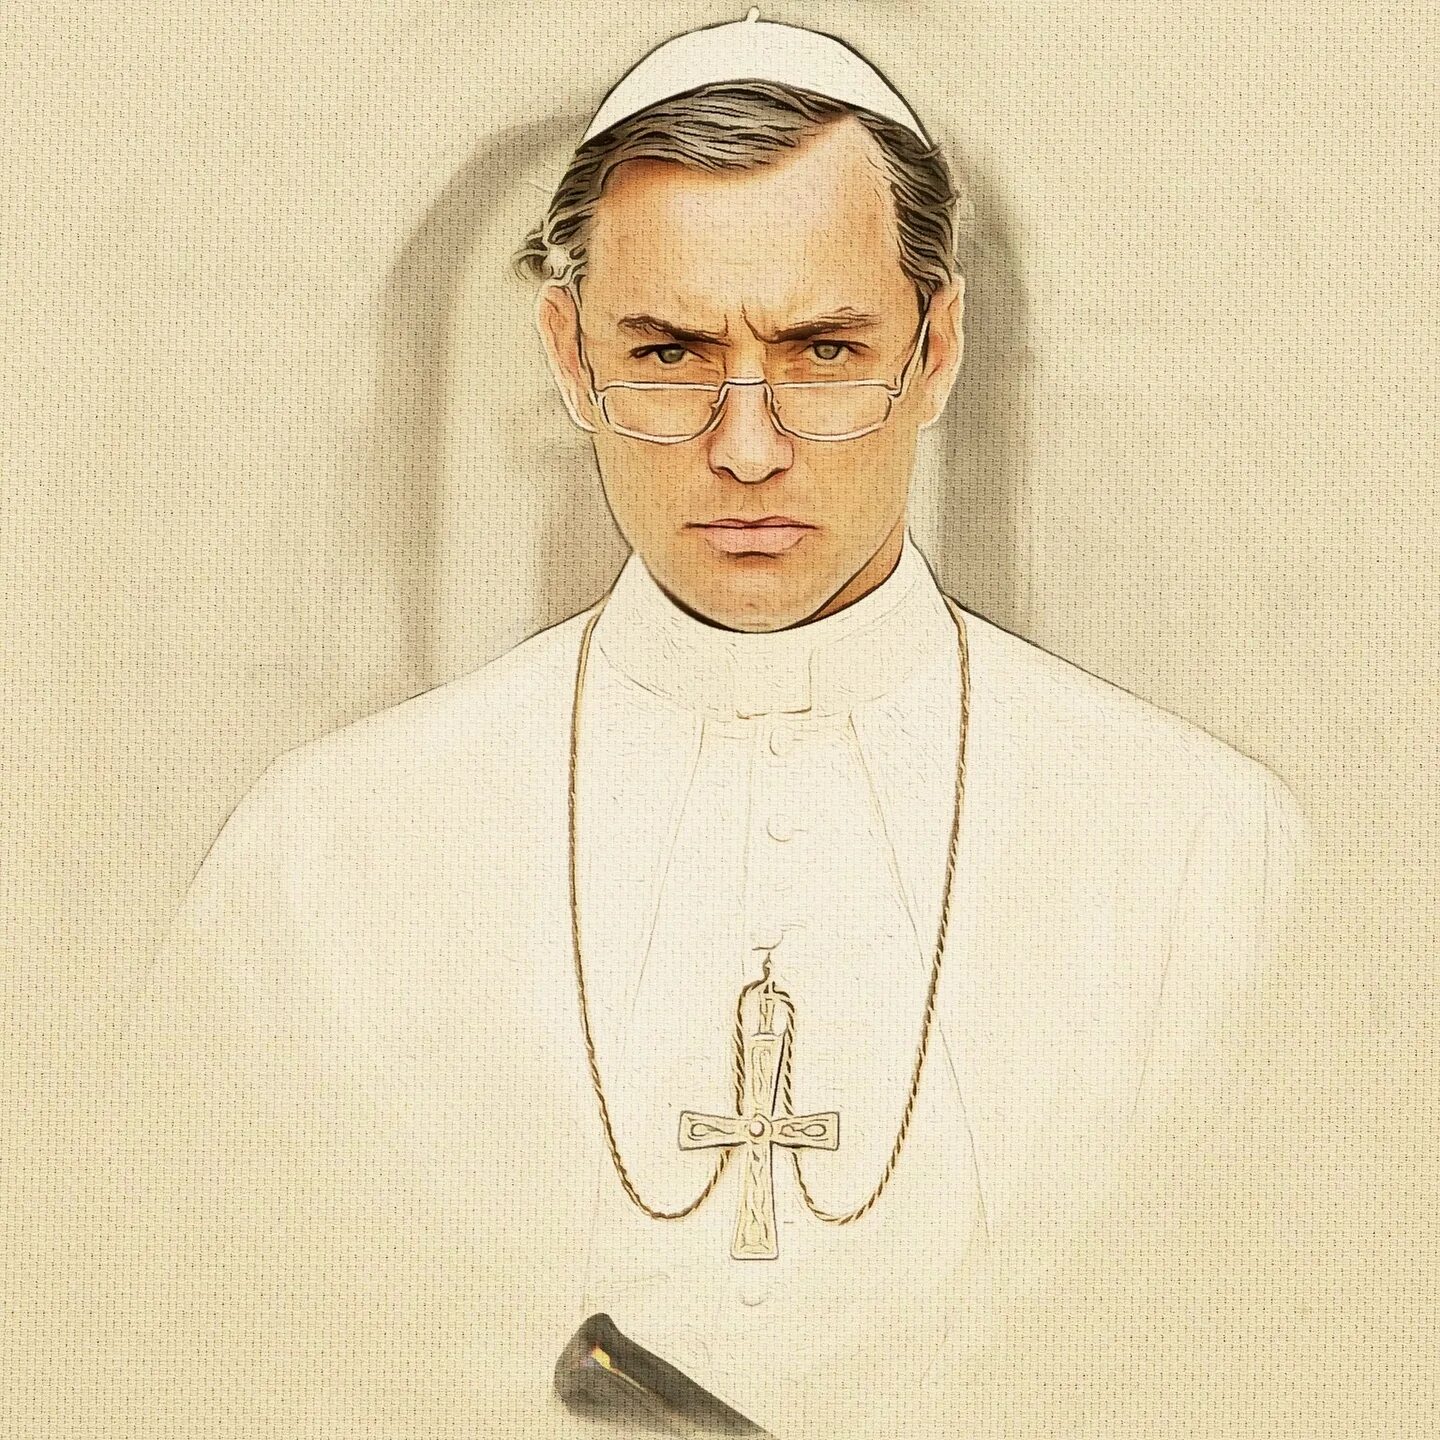 Кардинал Дюссолье молодой папа. Пий 13 молодой папа. Молодой папа Эстер. Молодой папа лоу